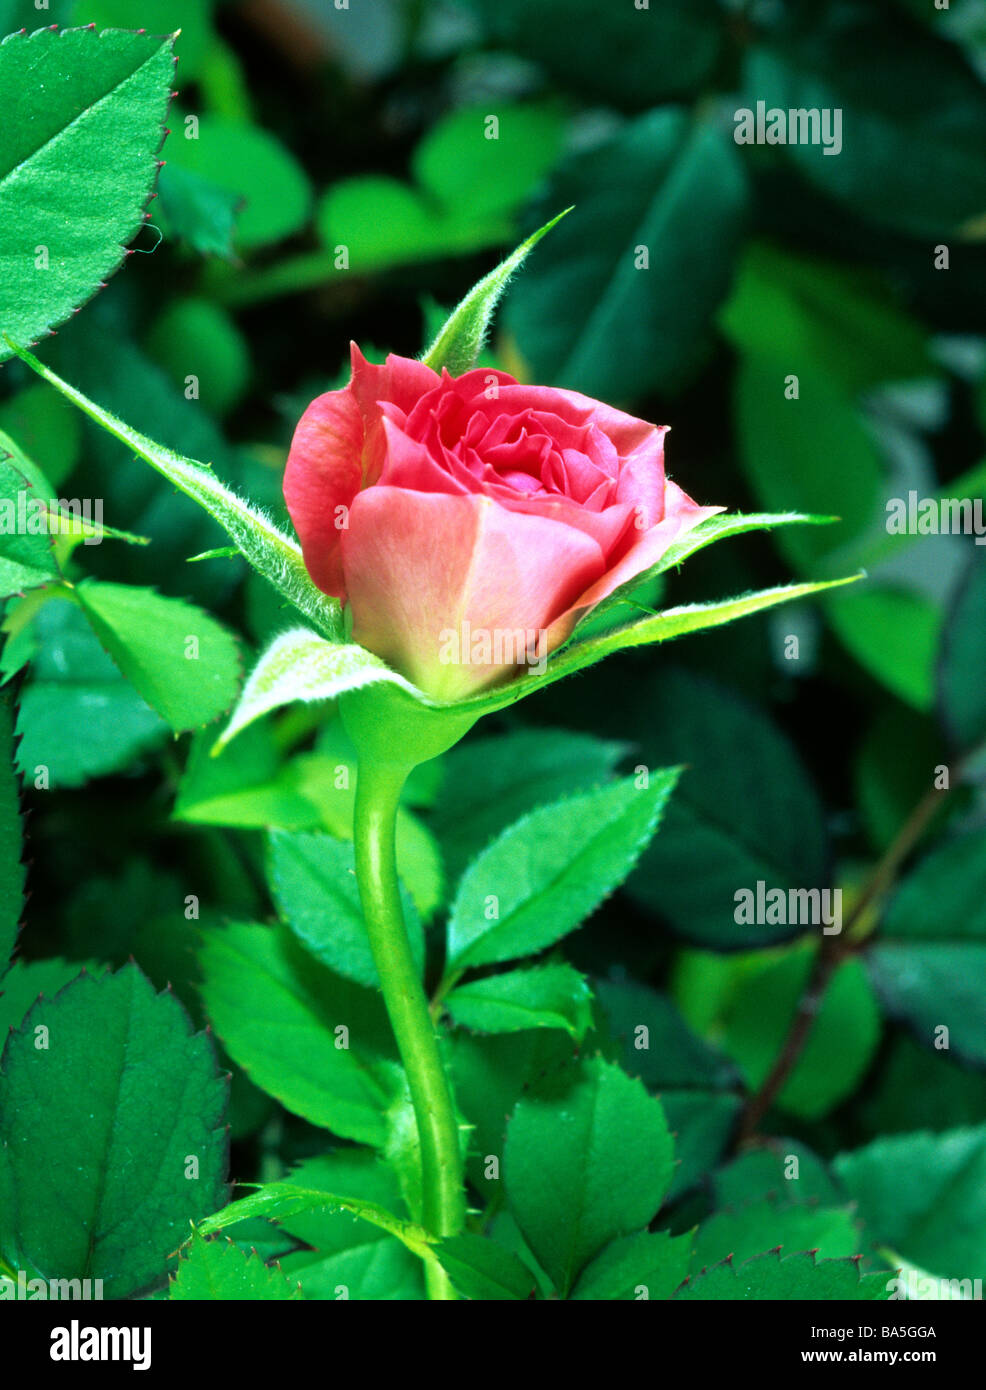 Red rose portrait, close-up micro macro artistic art face center flower flora floral vertical botanical Stock Photo